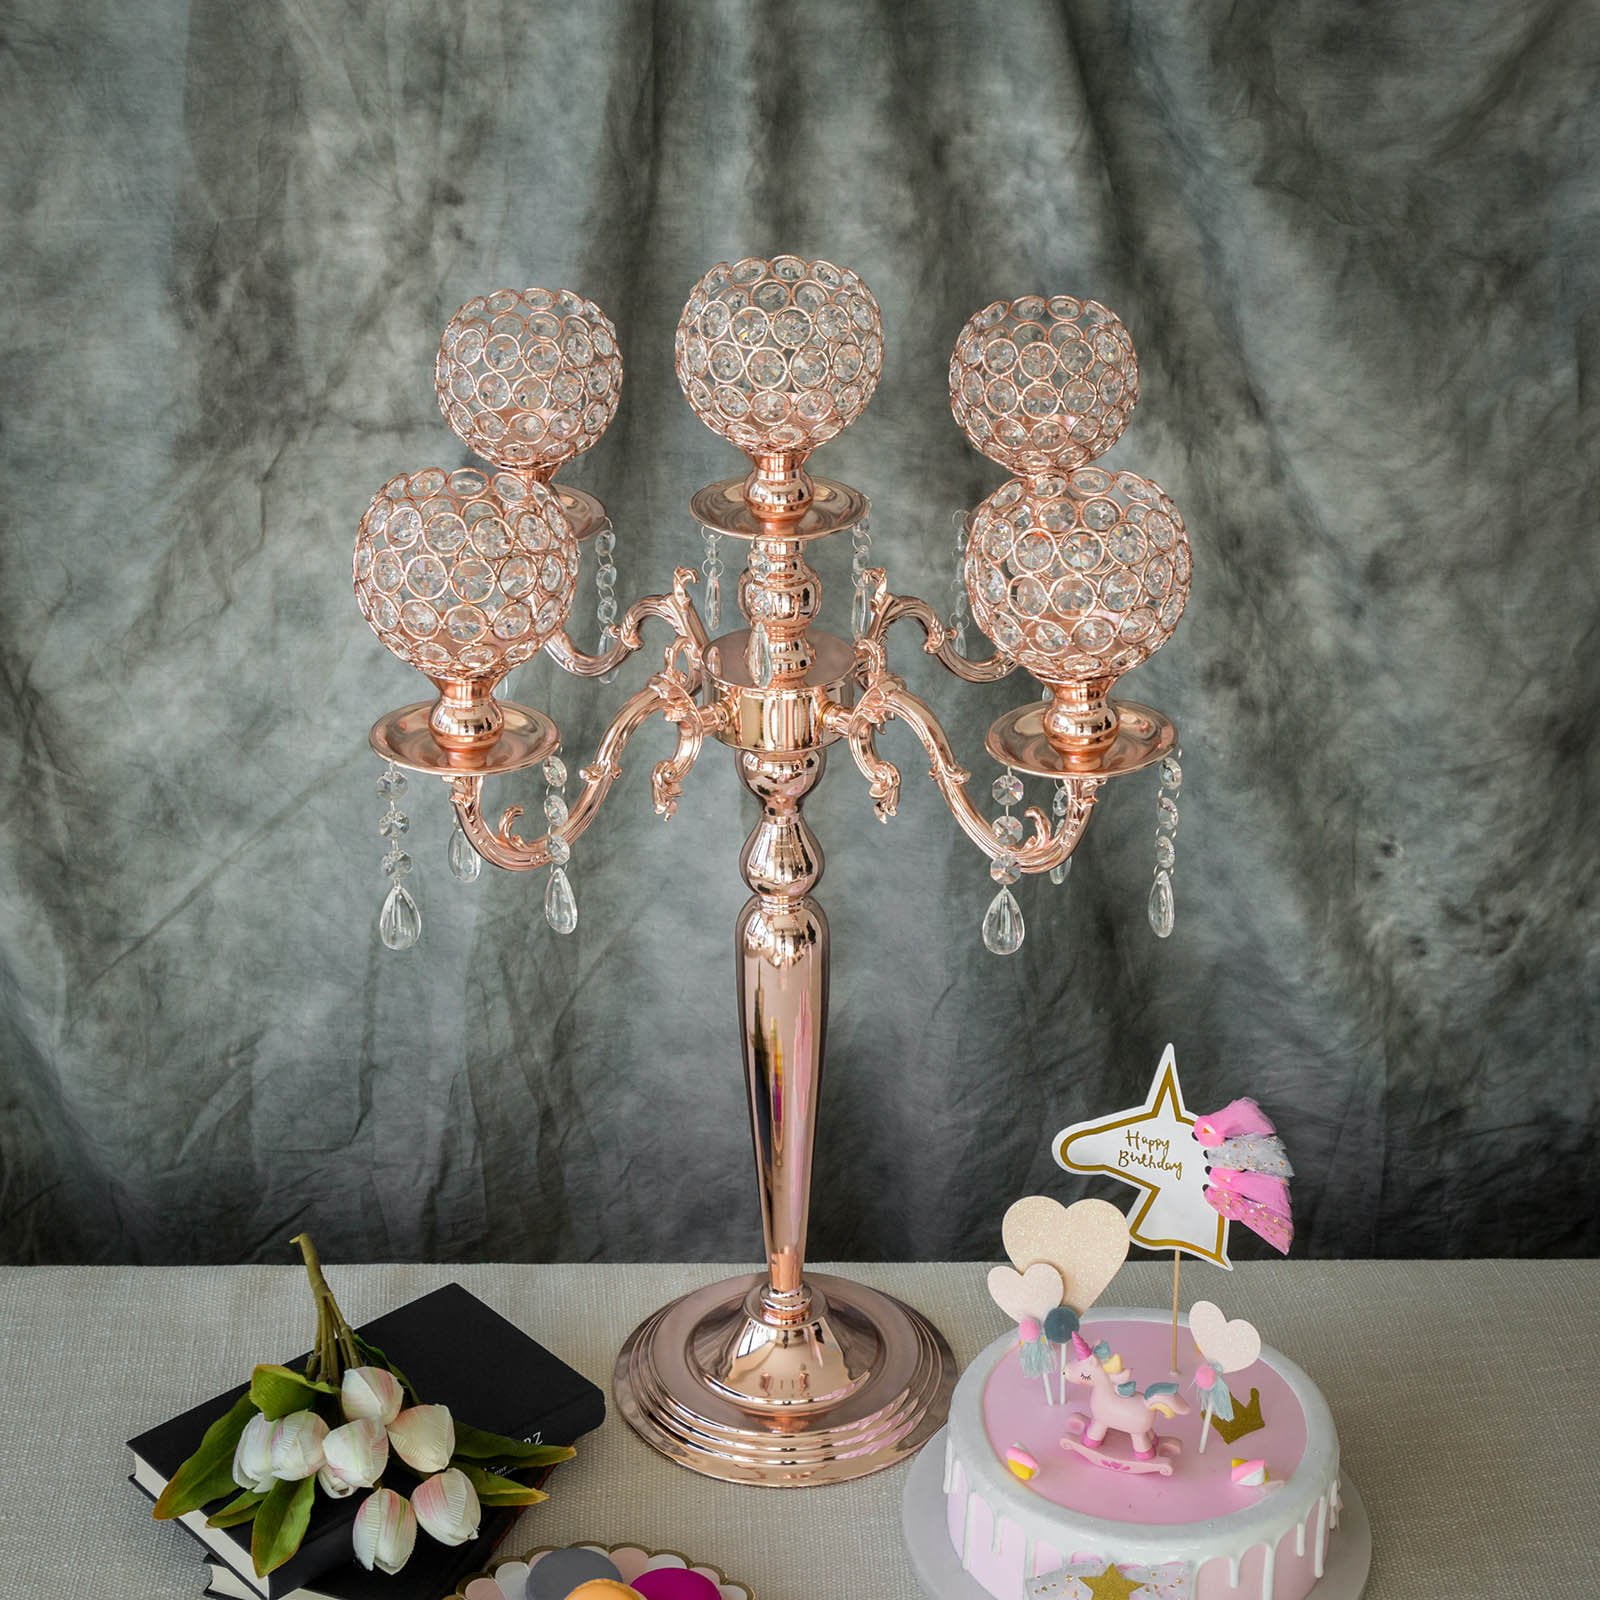 25" Tall Candelabra Chandelier Crystal Votive Candle Holder Wedding Centerpiece 